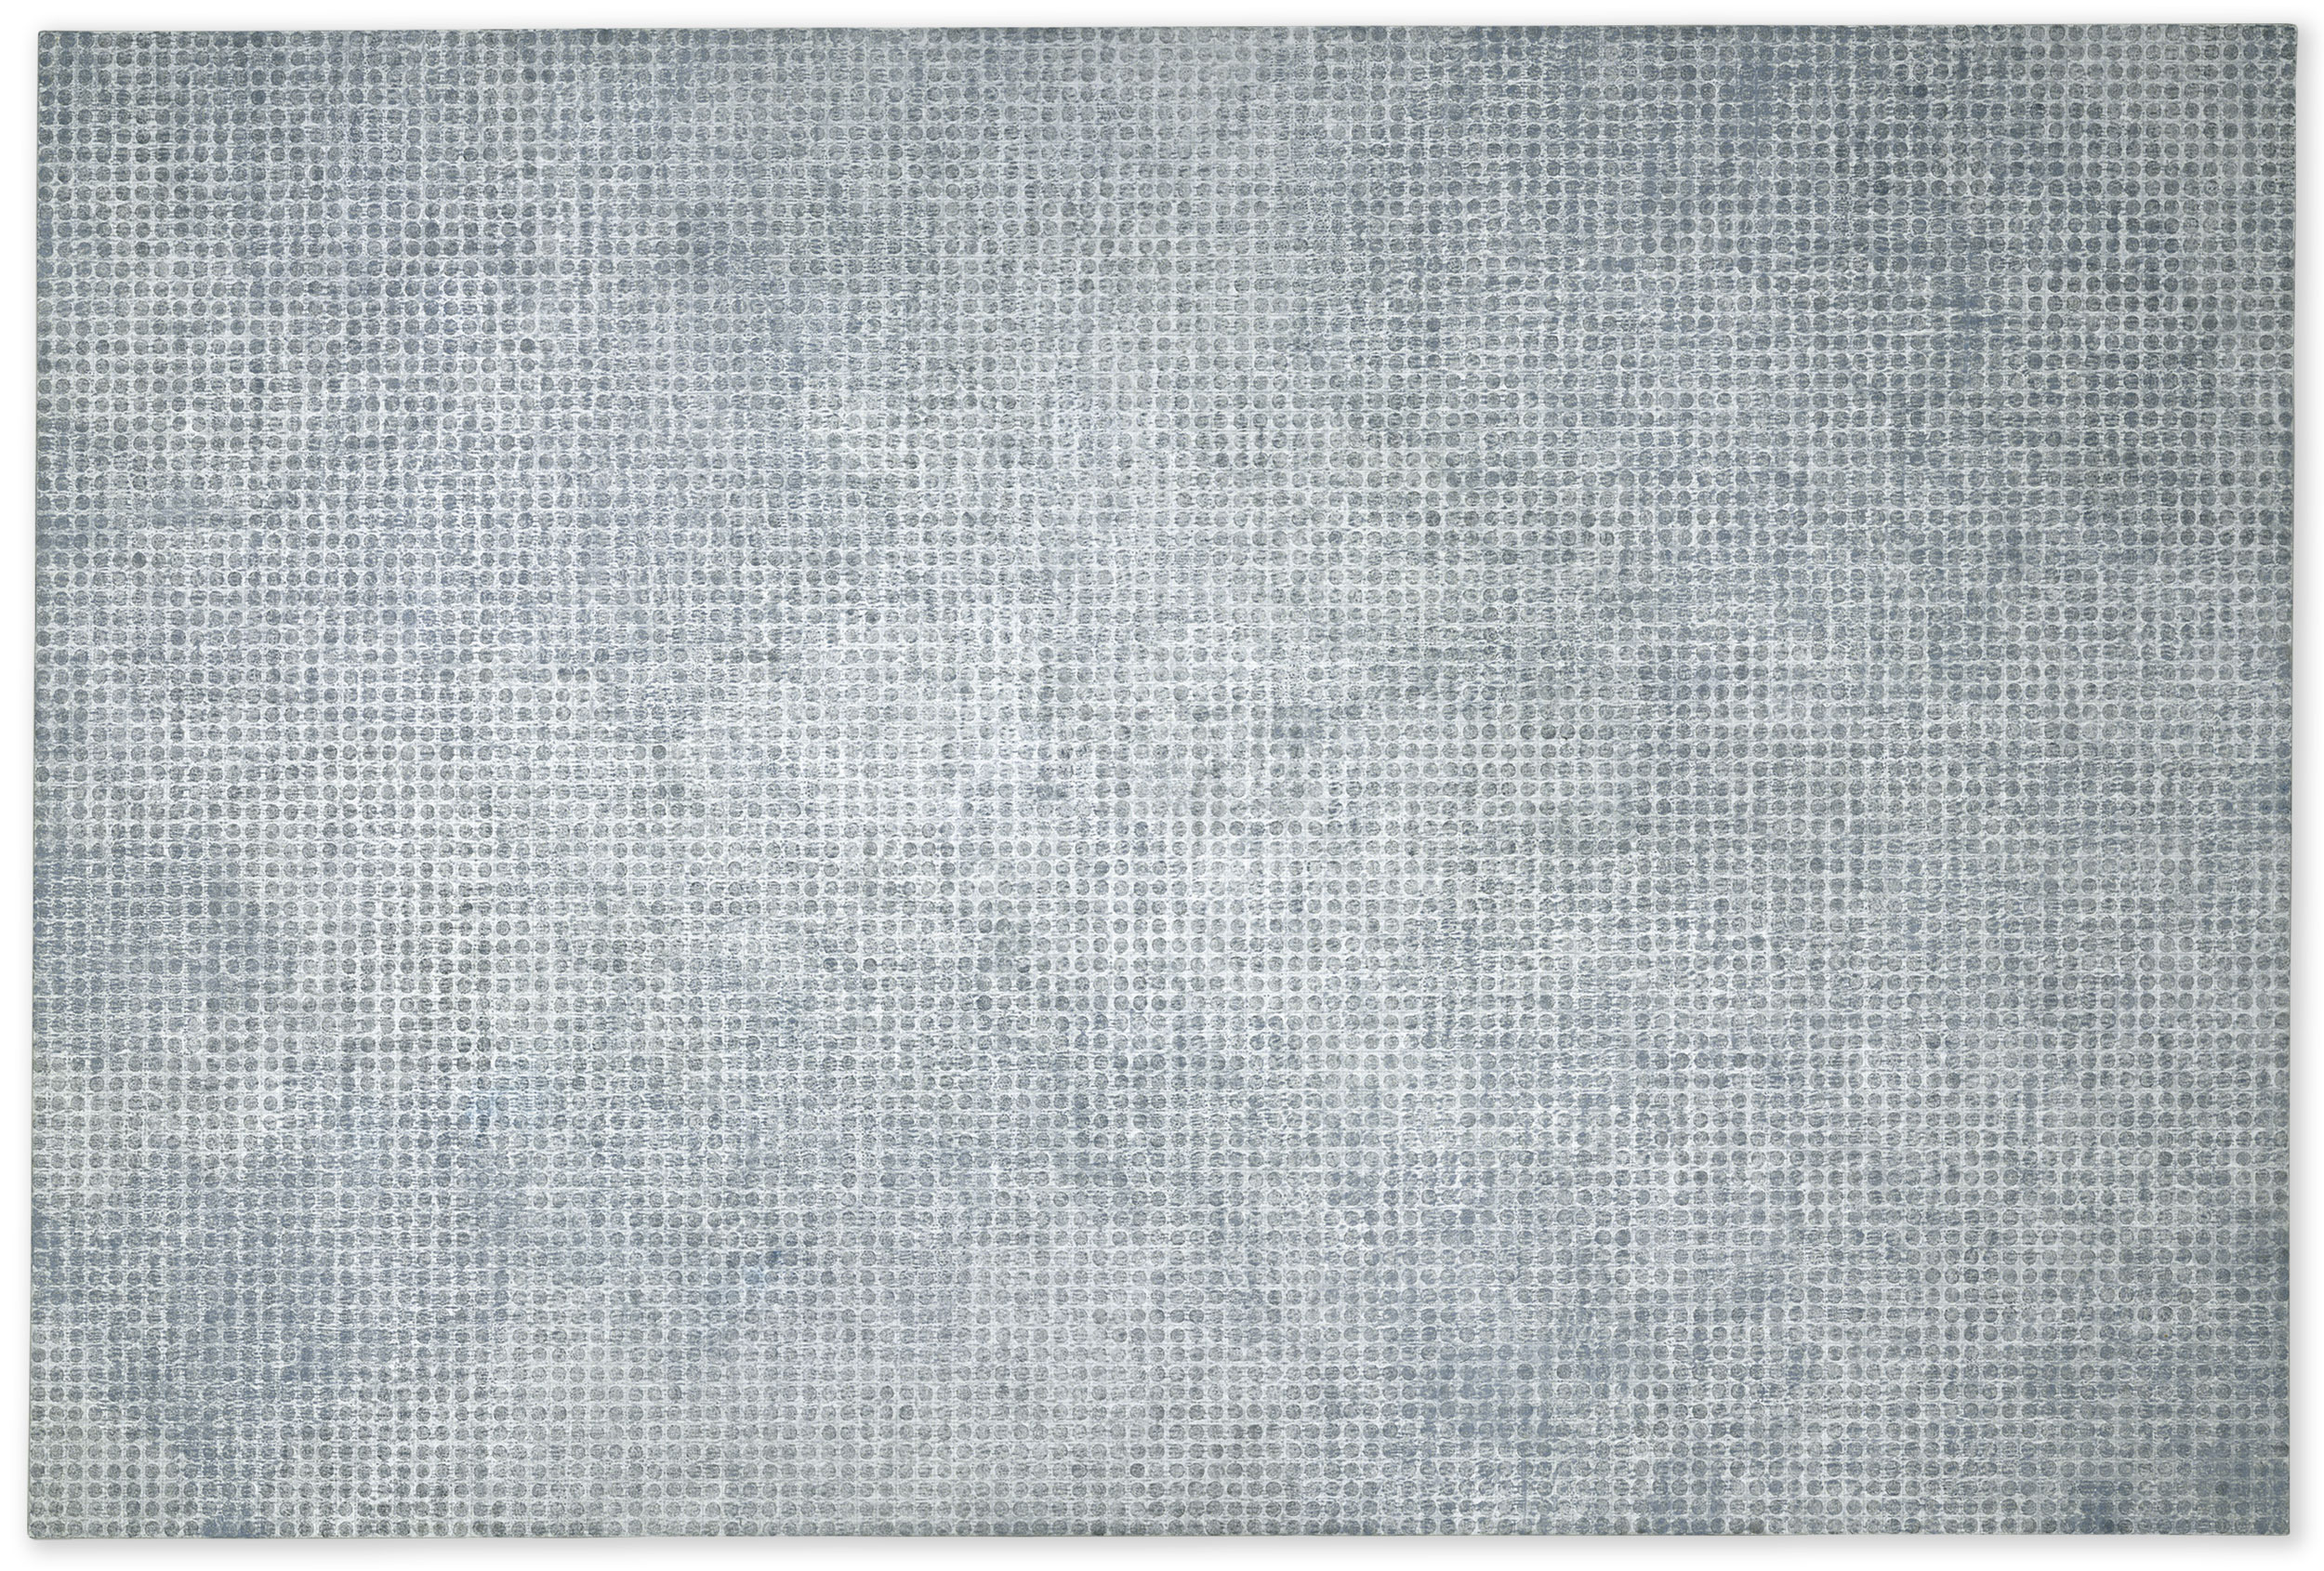 SLATE RIDGE / 2003 · graphite, acryl on canvas · 180 x 270 cm